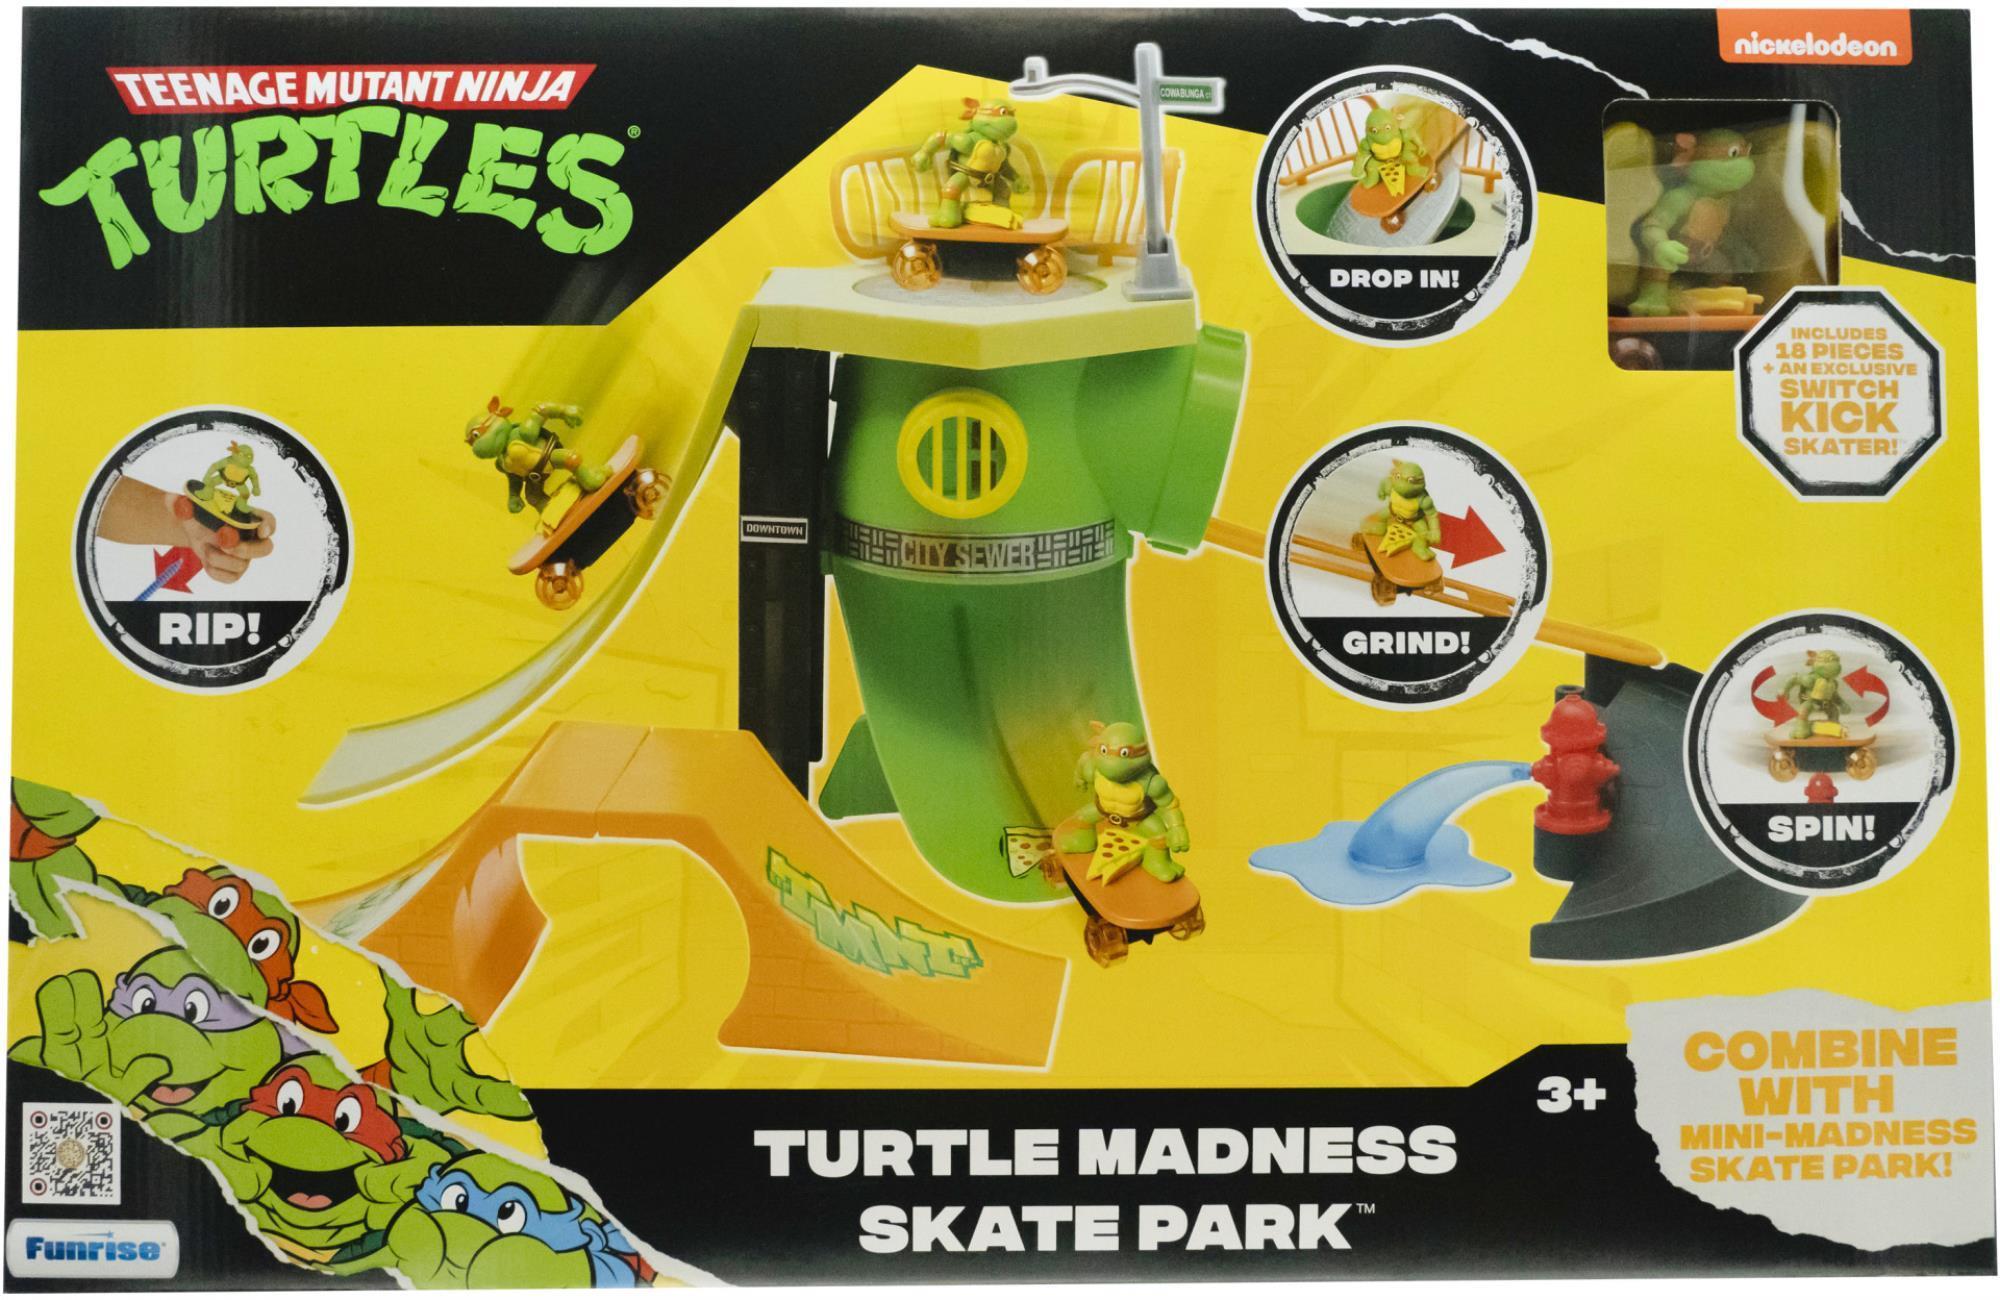 Teenage Mutant Ninja Turtles Switch Kick Turtle Madness Skate Park (Classic)